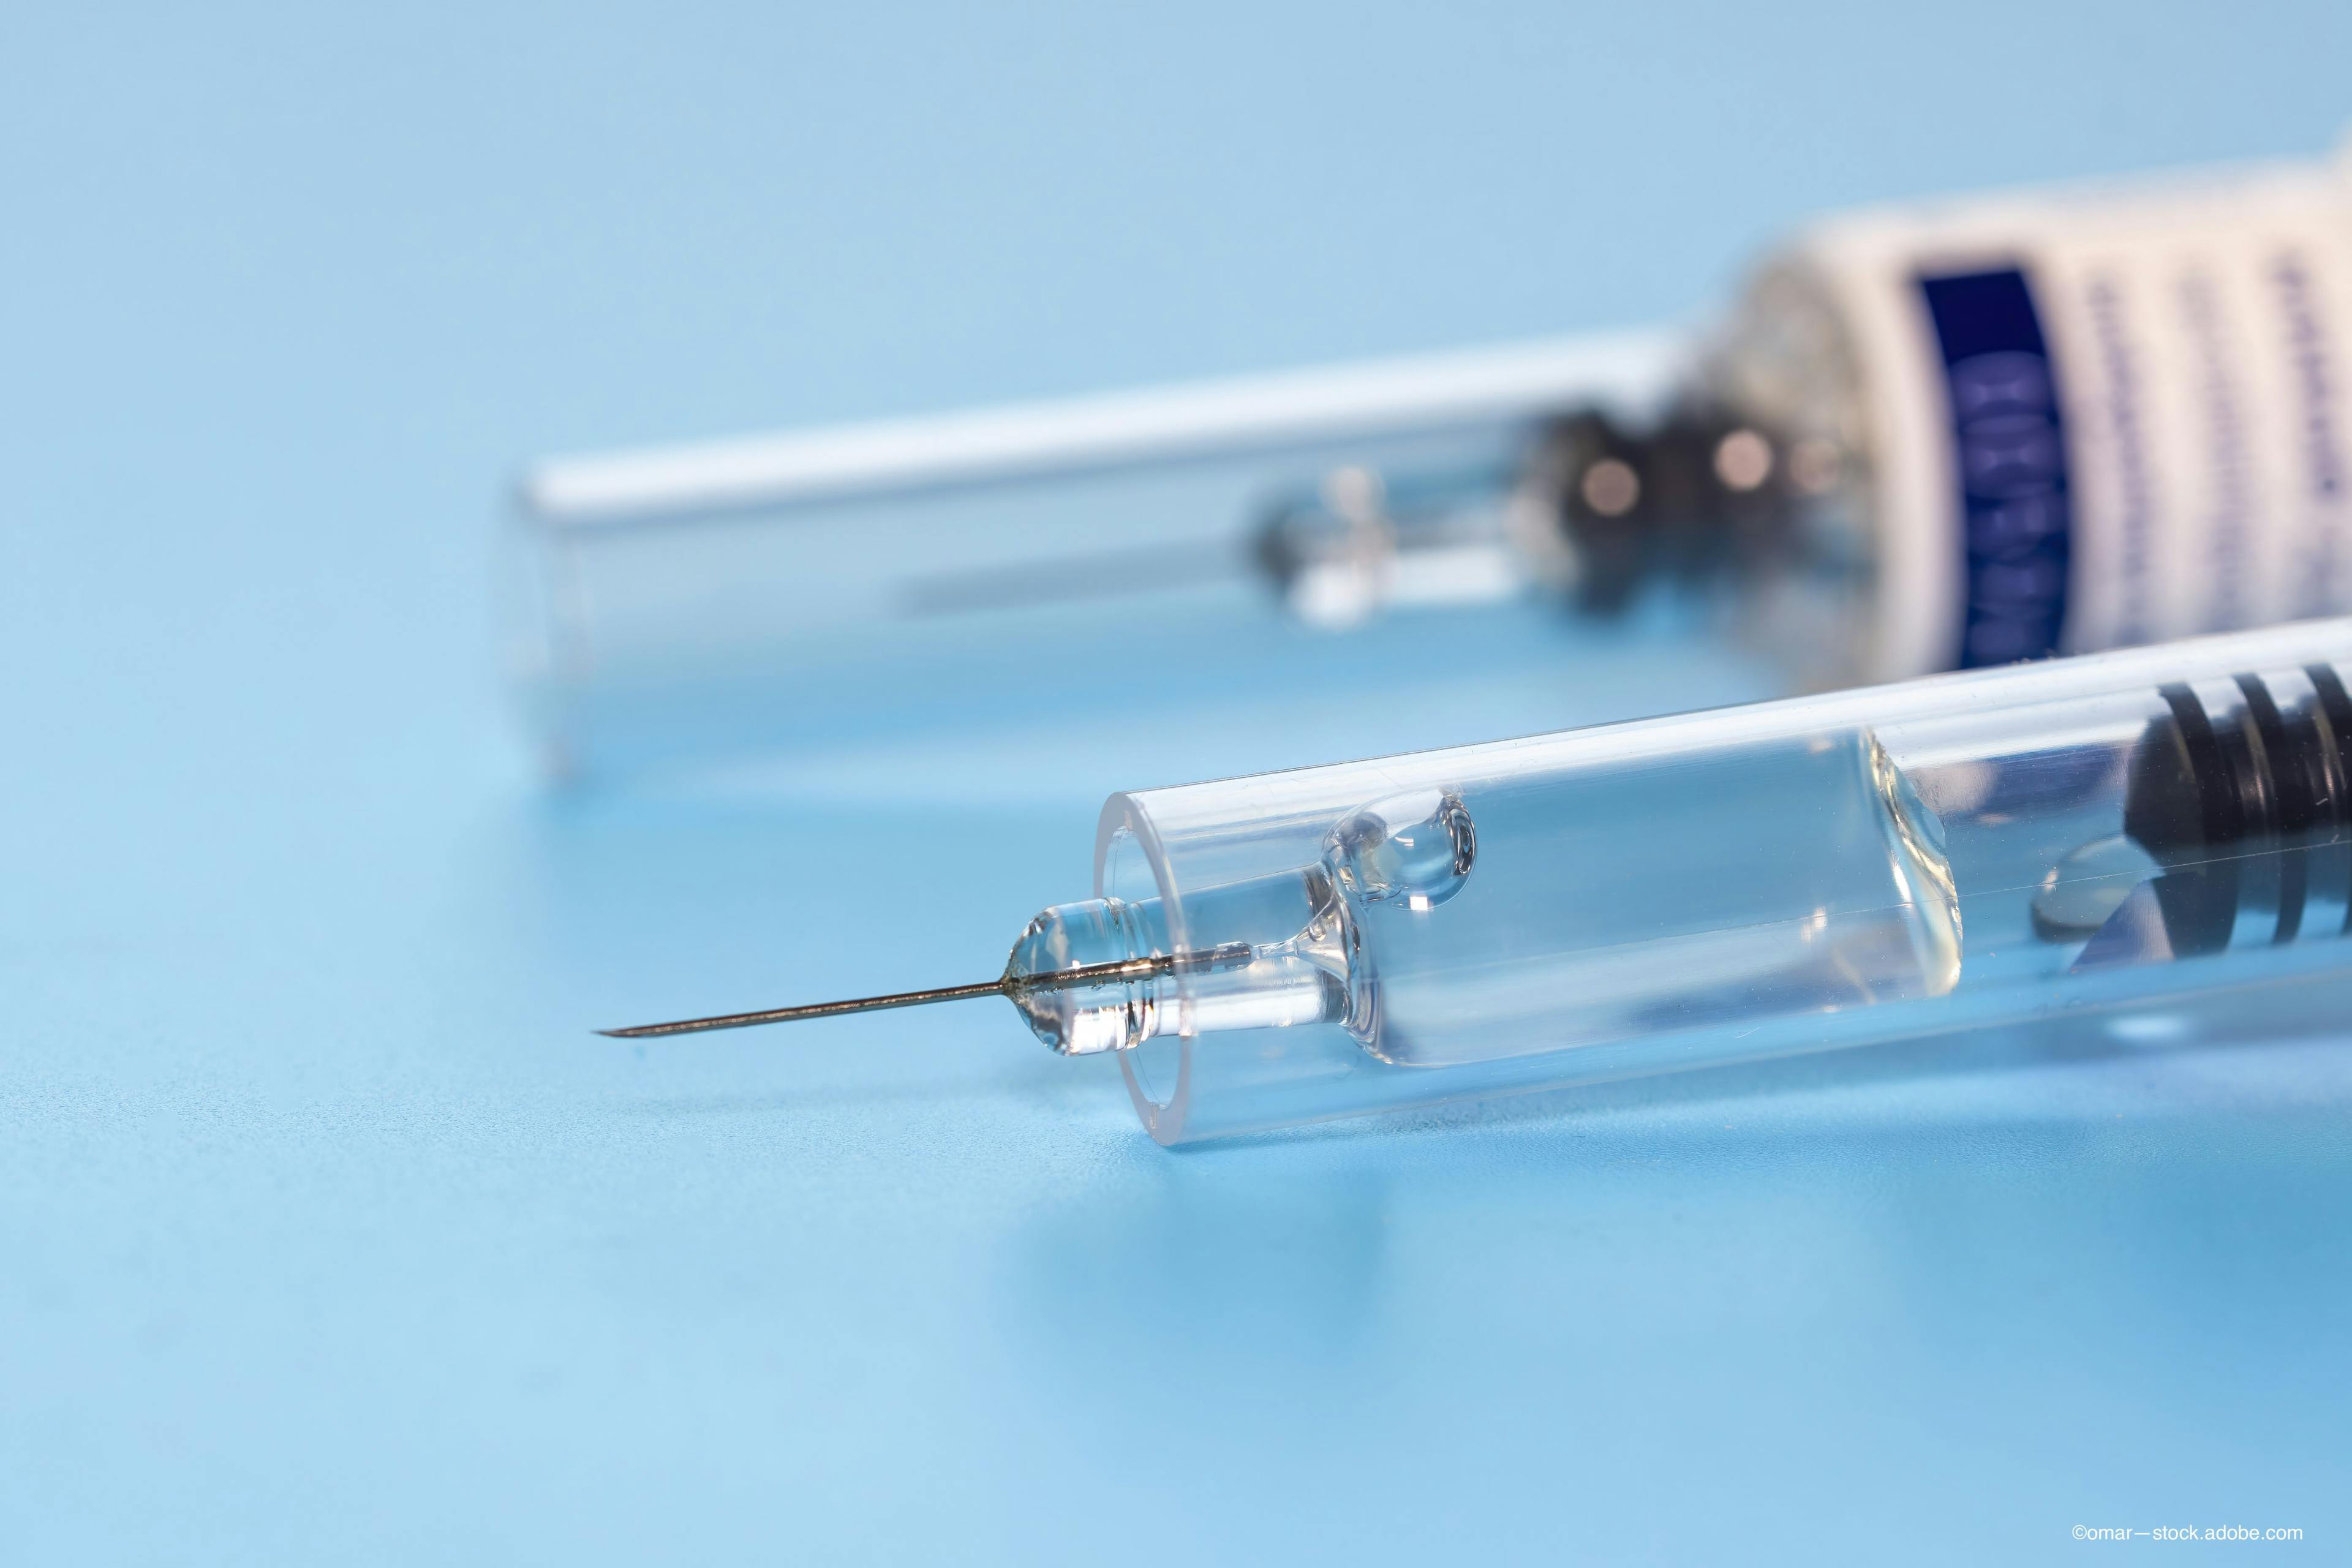 Dosing variability with pre-filled syringes of aflibercept presents risk of overdose